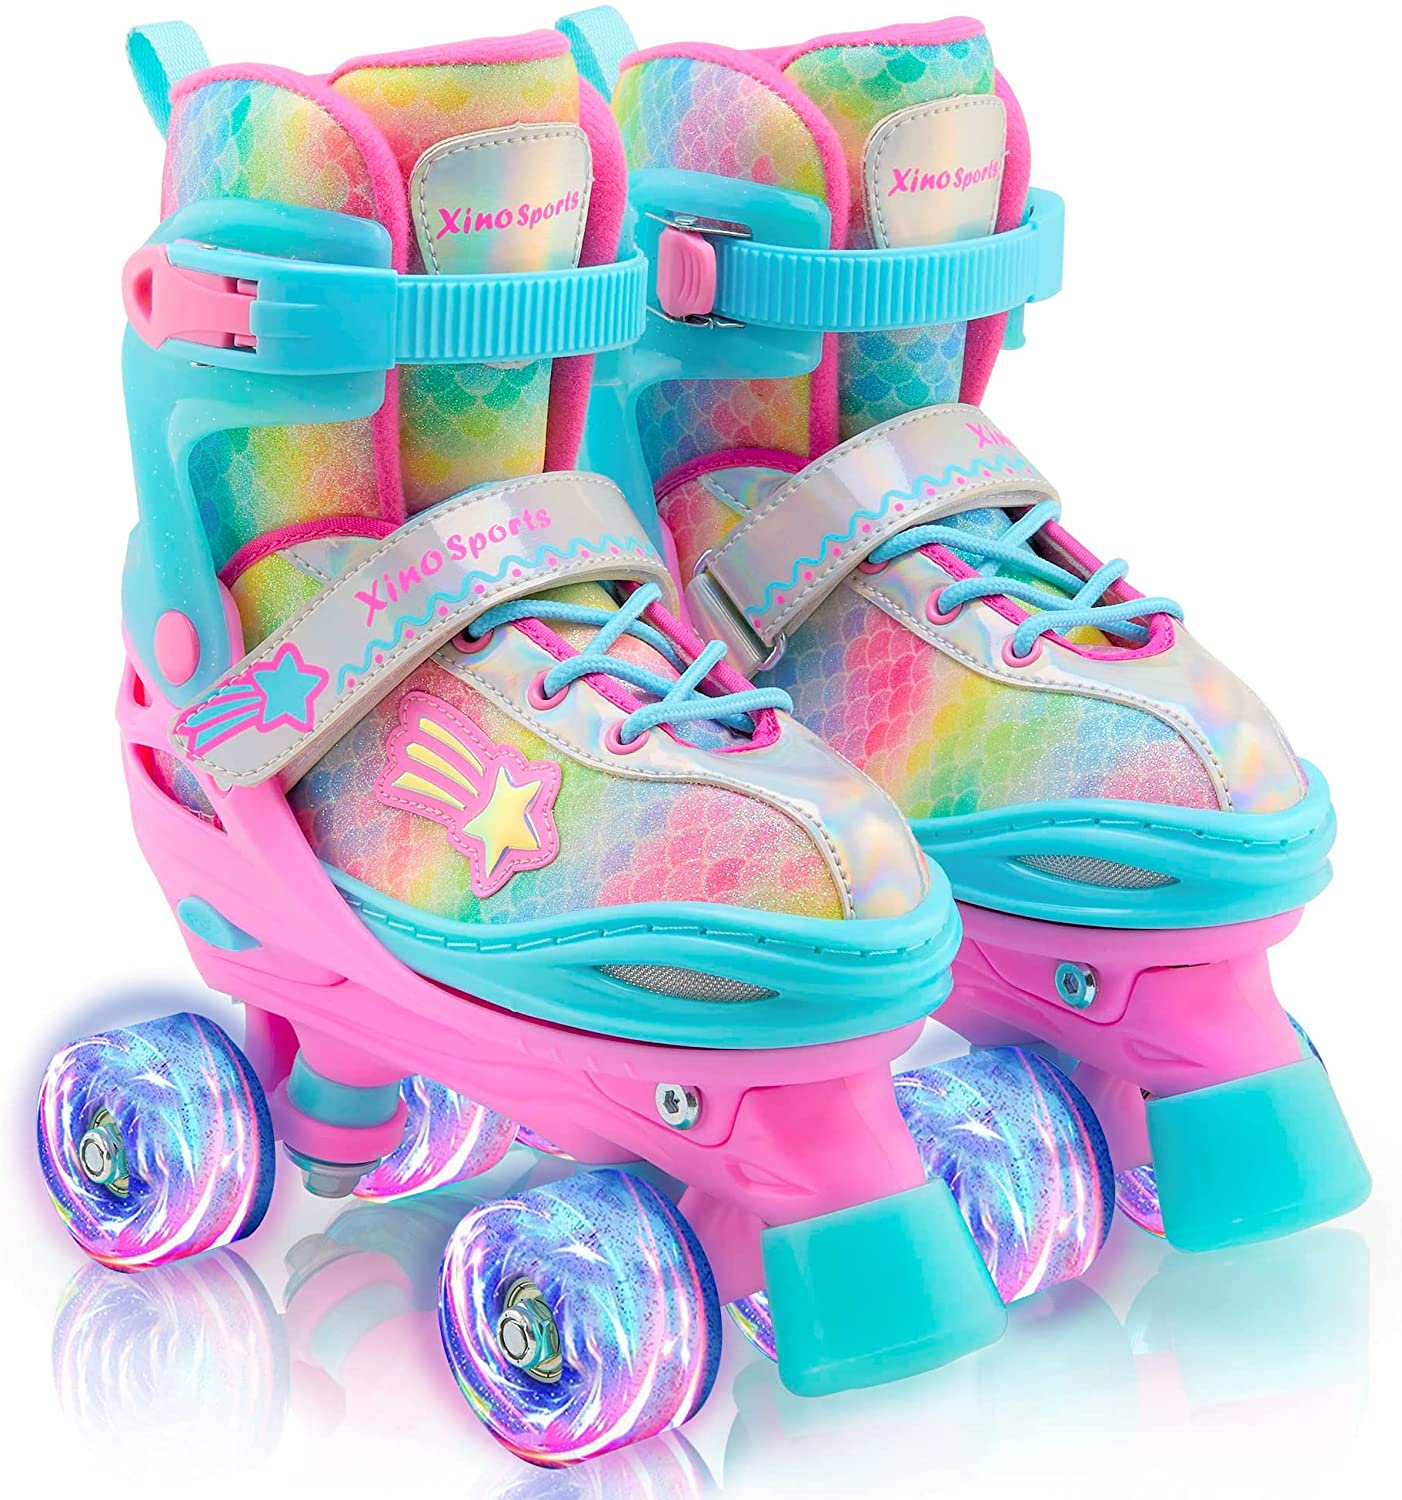 Adjustable roller skates for kids - Xino Sports